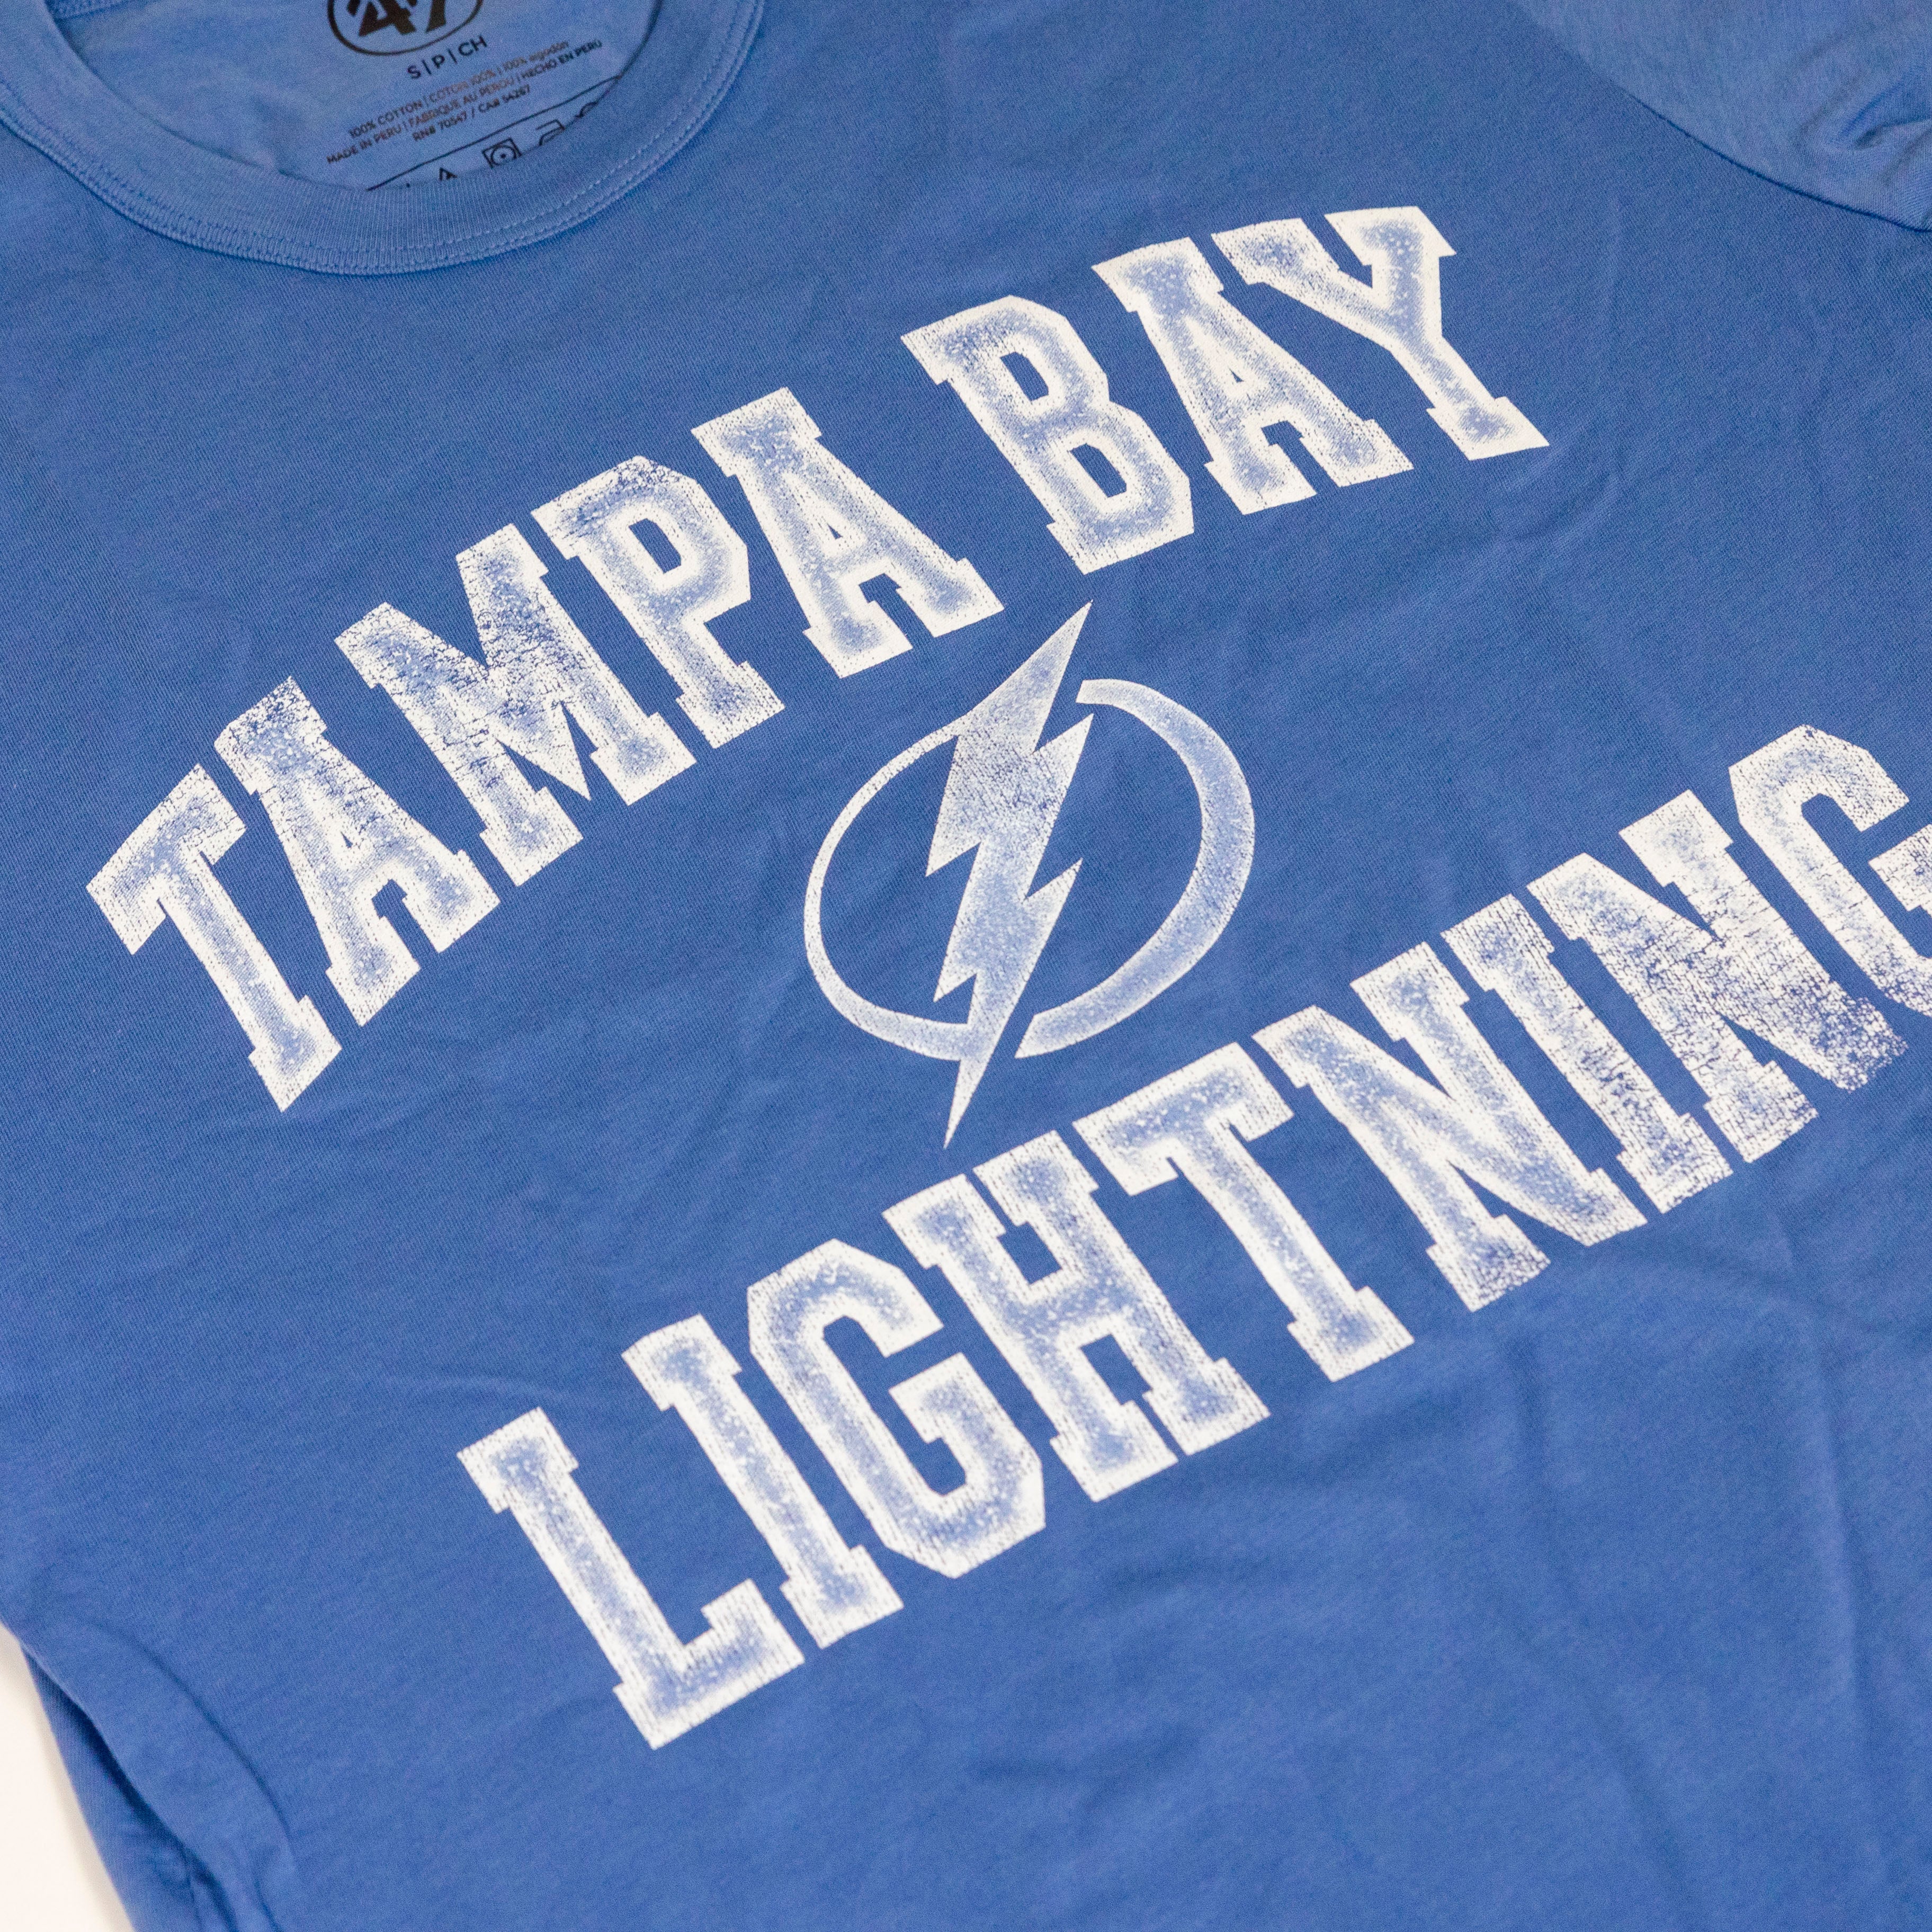 Tampa Bay Lightning T-Shirts, Lightning T-Shirts